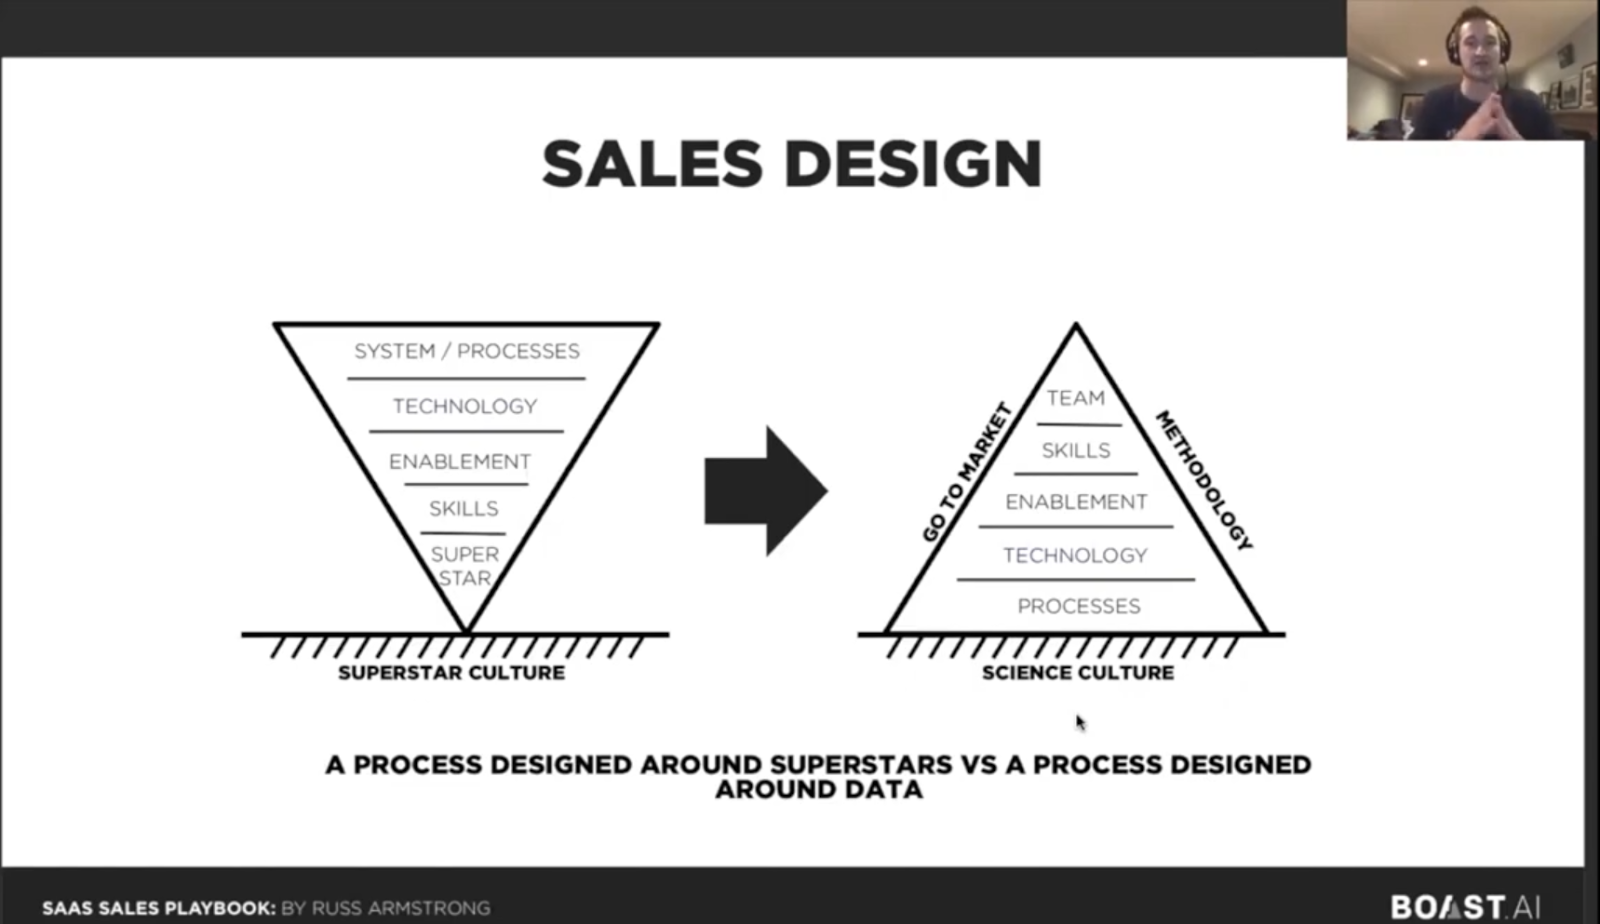 Sales Design in your Sales Playbook